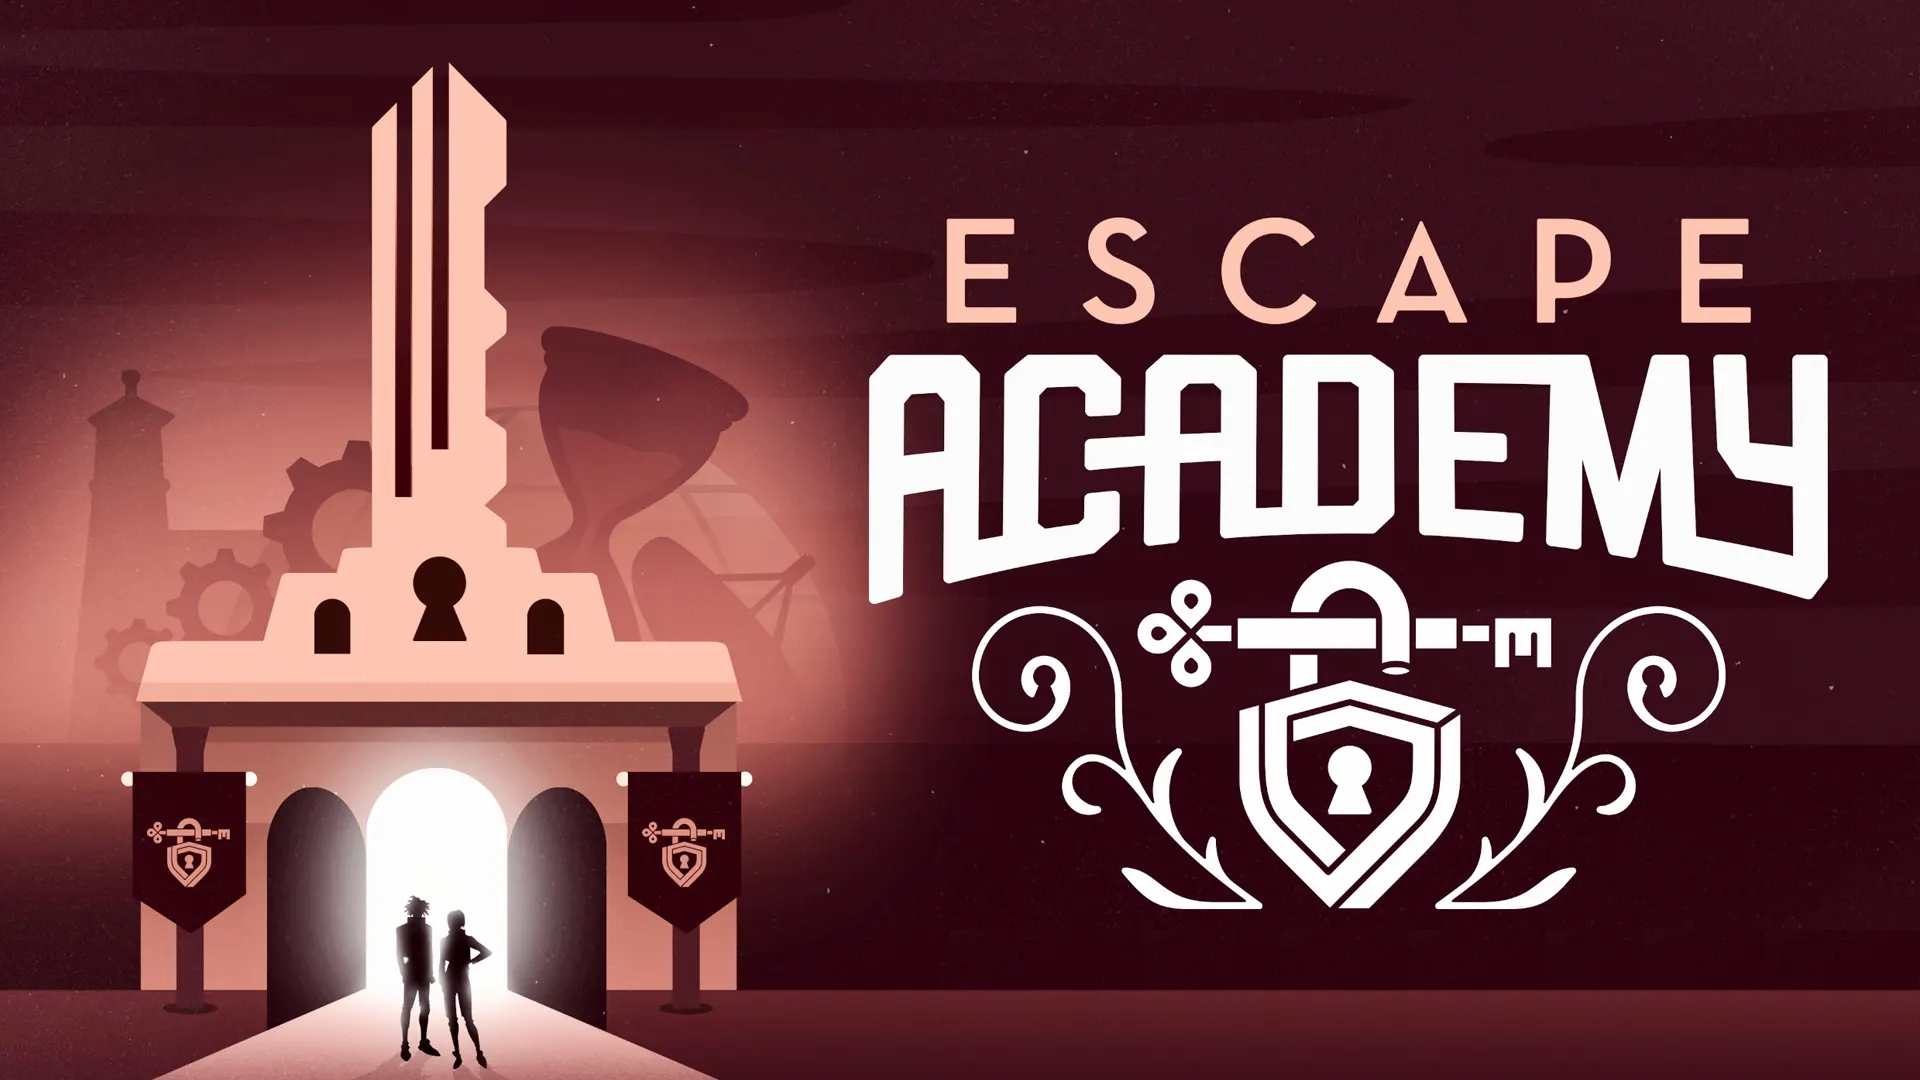 لعبة Escape Academy